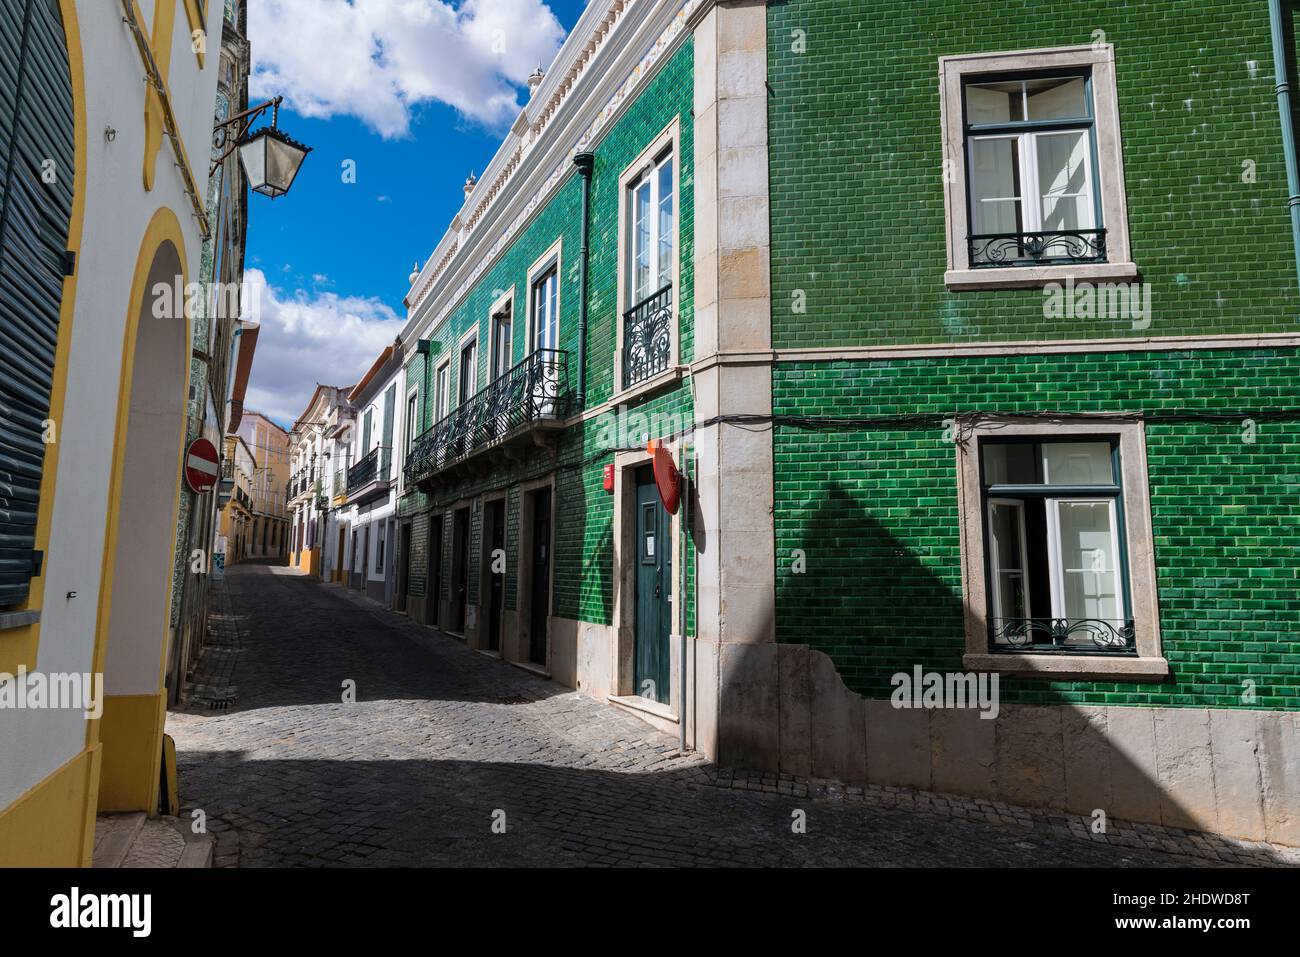 House with green ceramic tiles (azulejo's) in a narrow cobbled street in Beja, Alentejo, Portugal Stock Photo